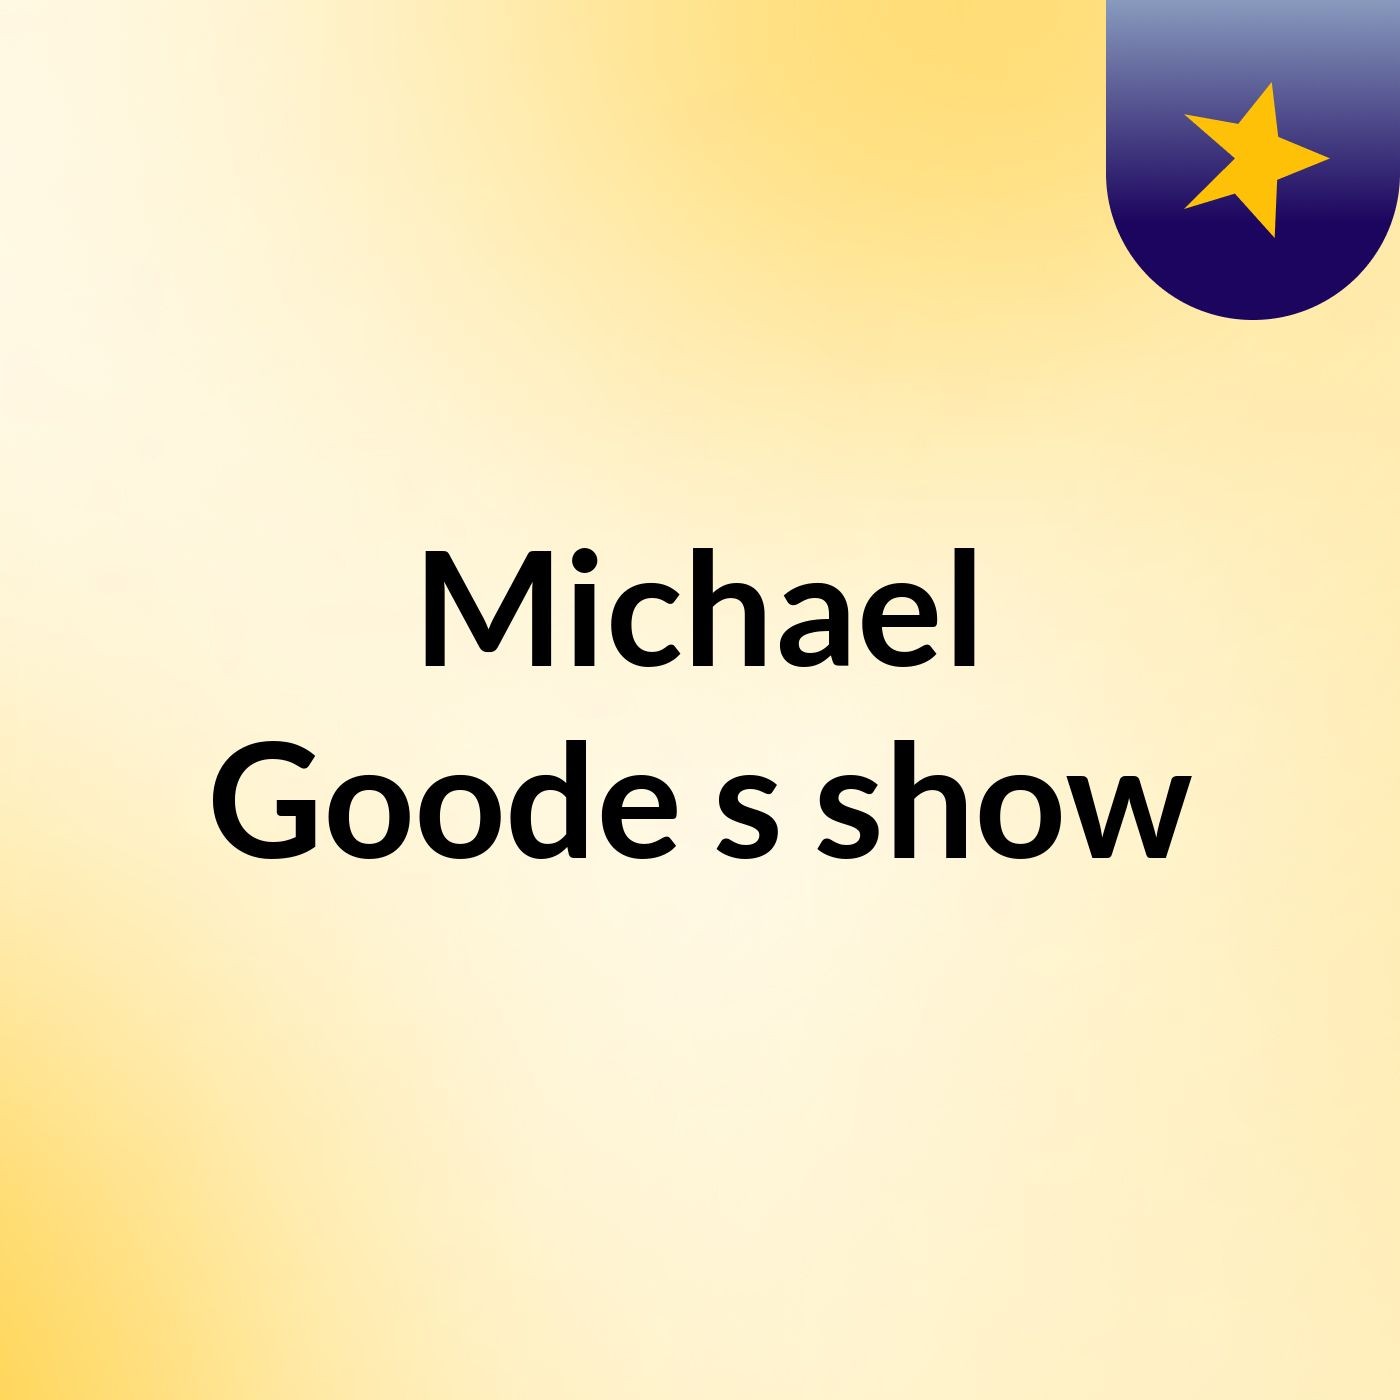 Episode 8 - Michael Goode's show